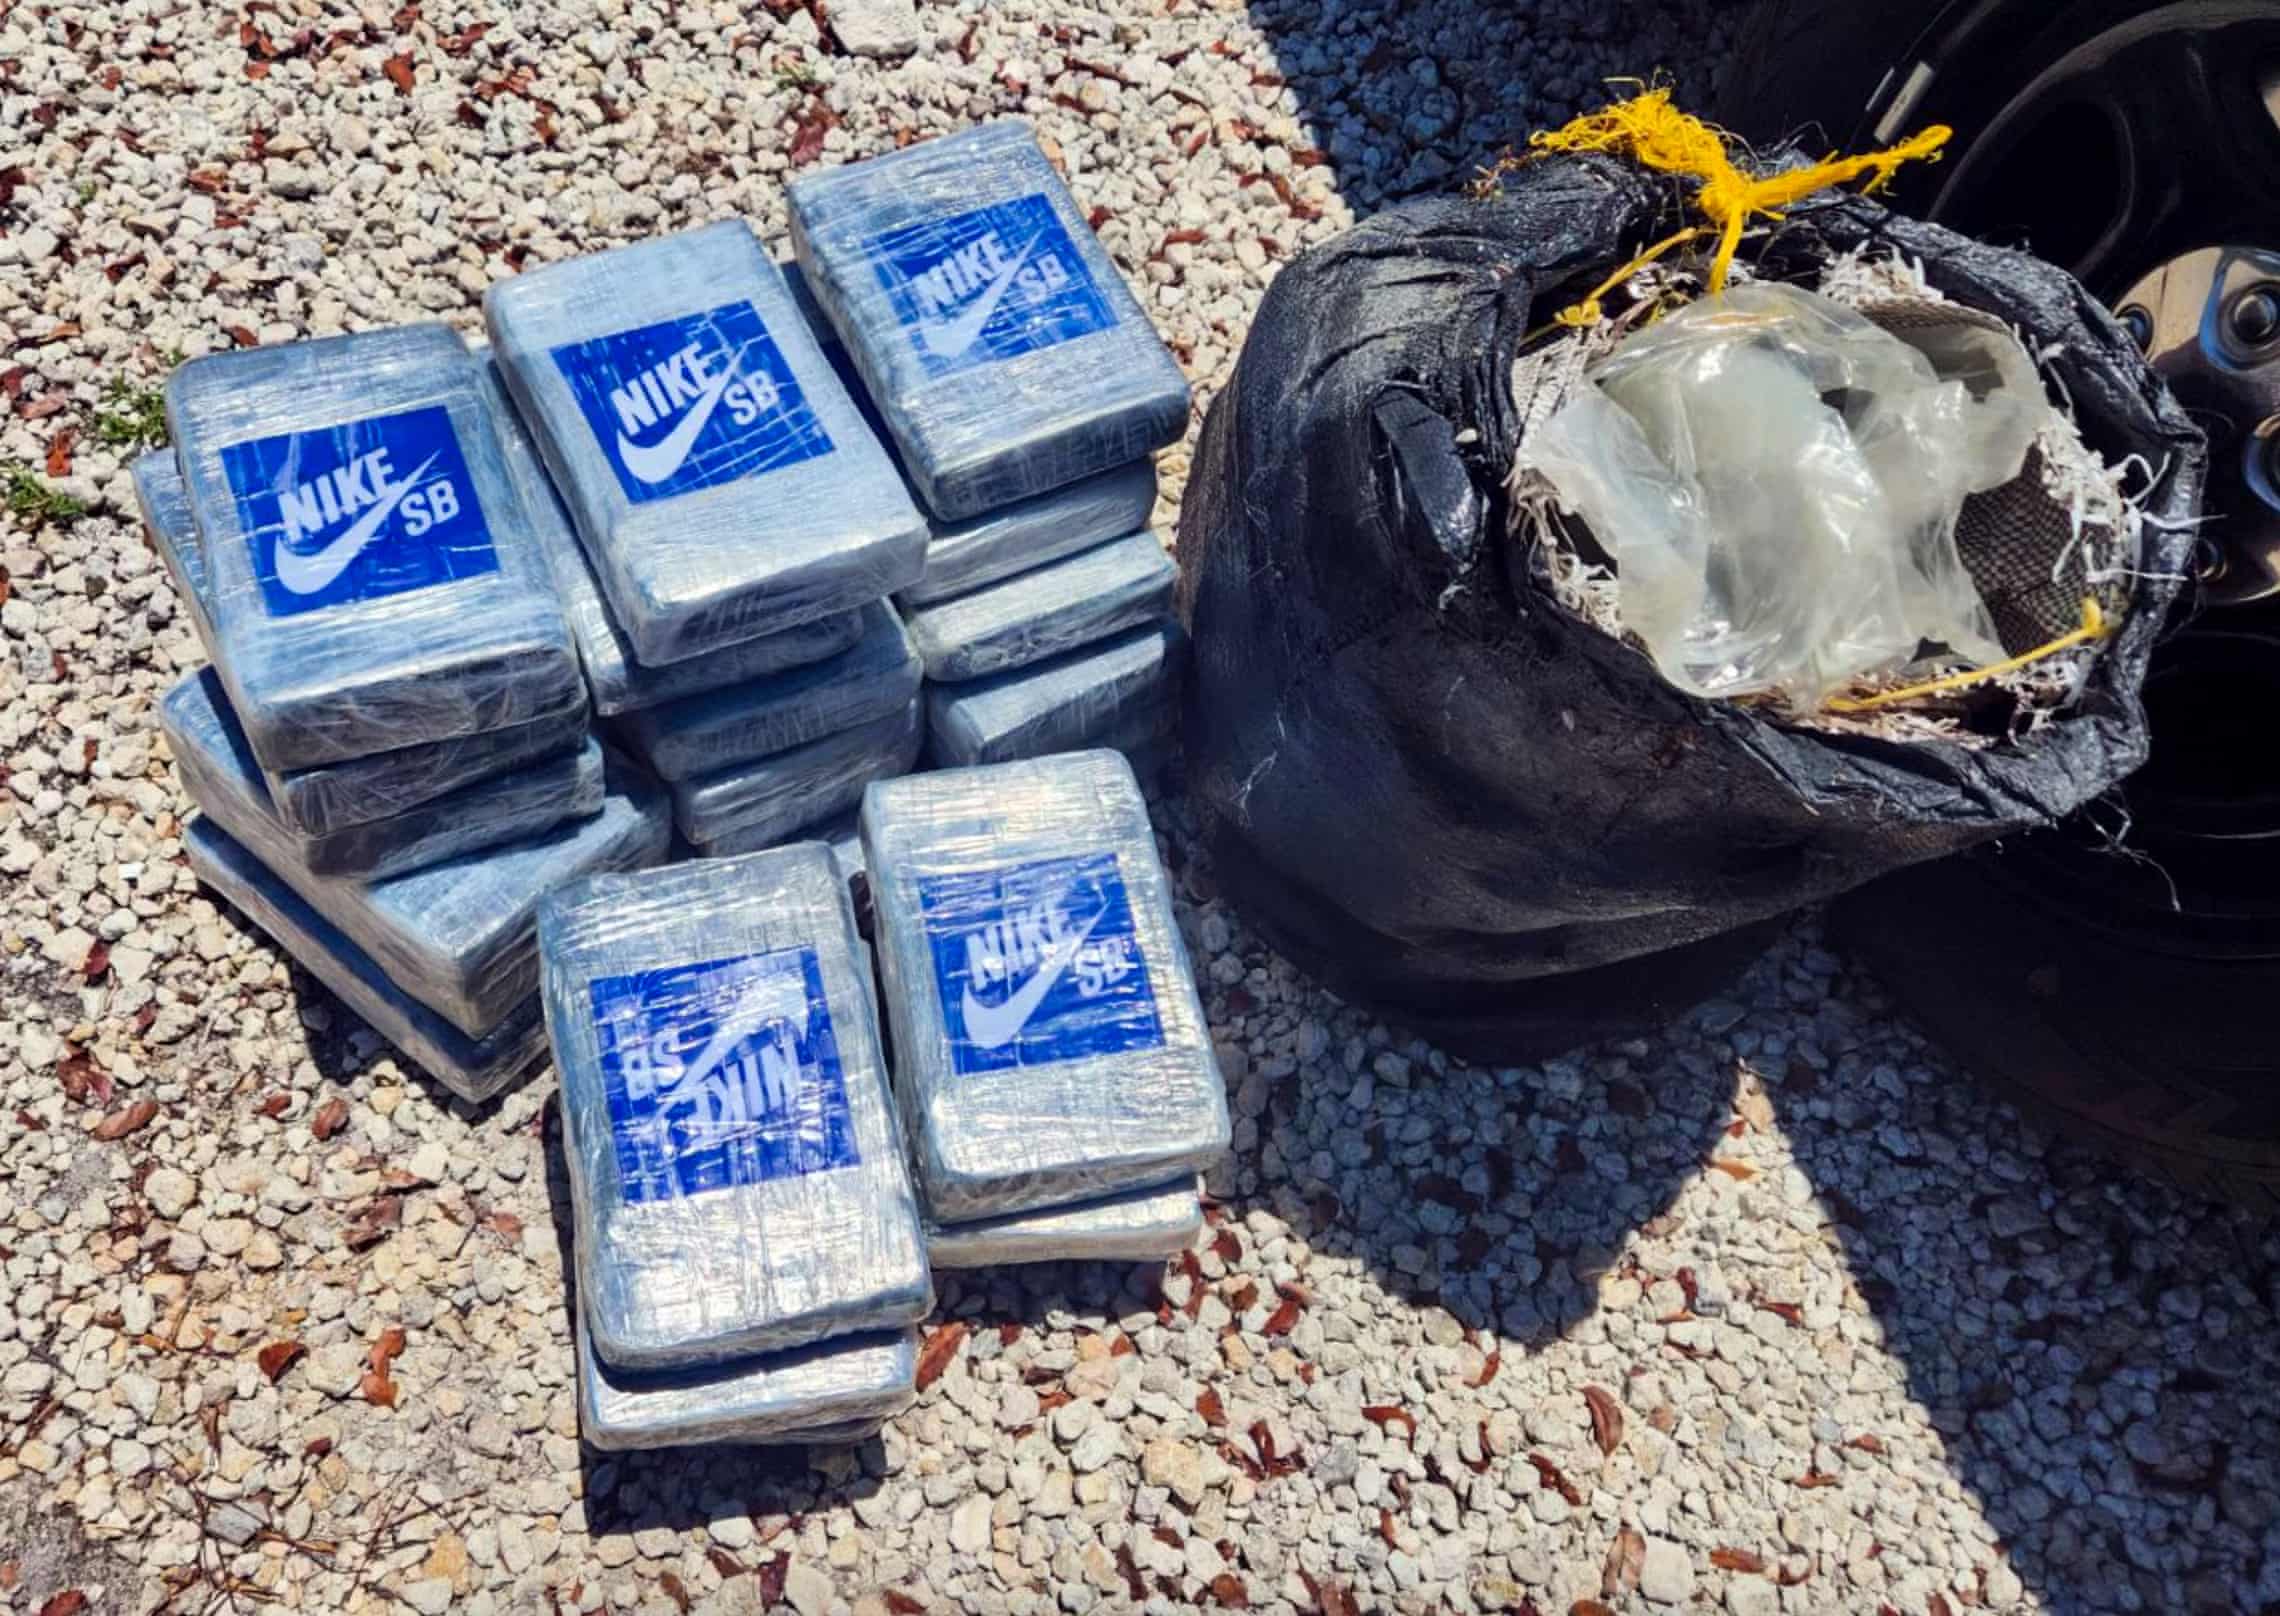 FL divers find cocaine